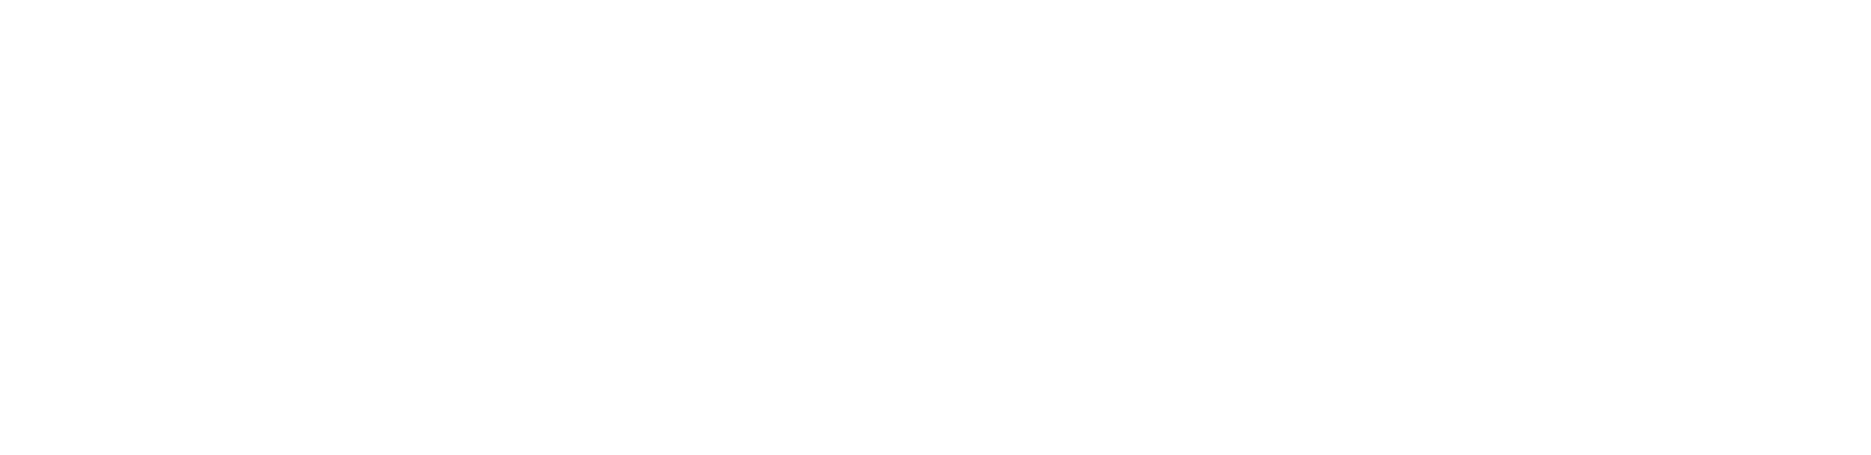 Pet Boarding and Daycare Magazine logo